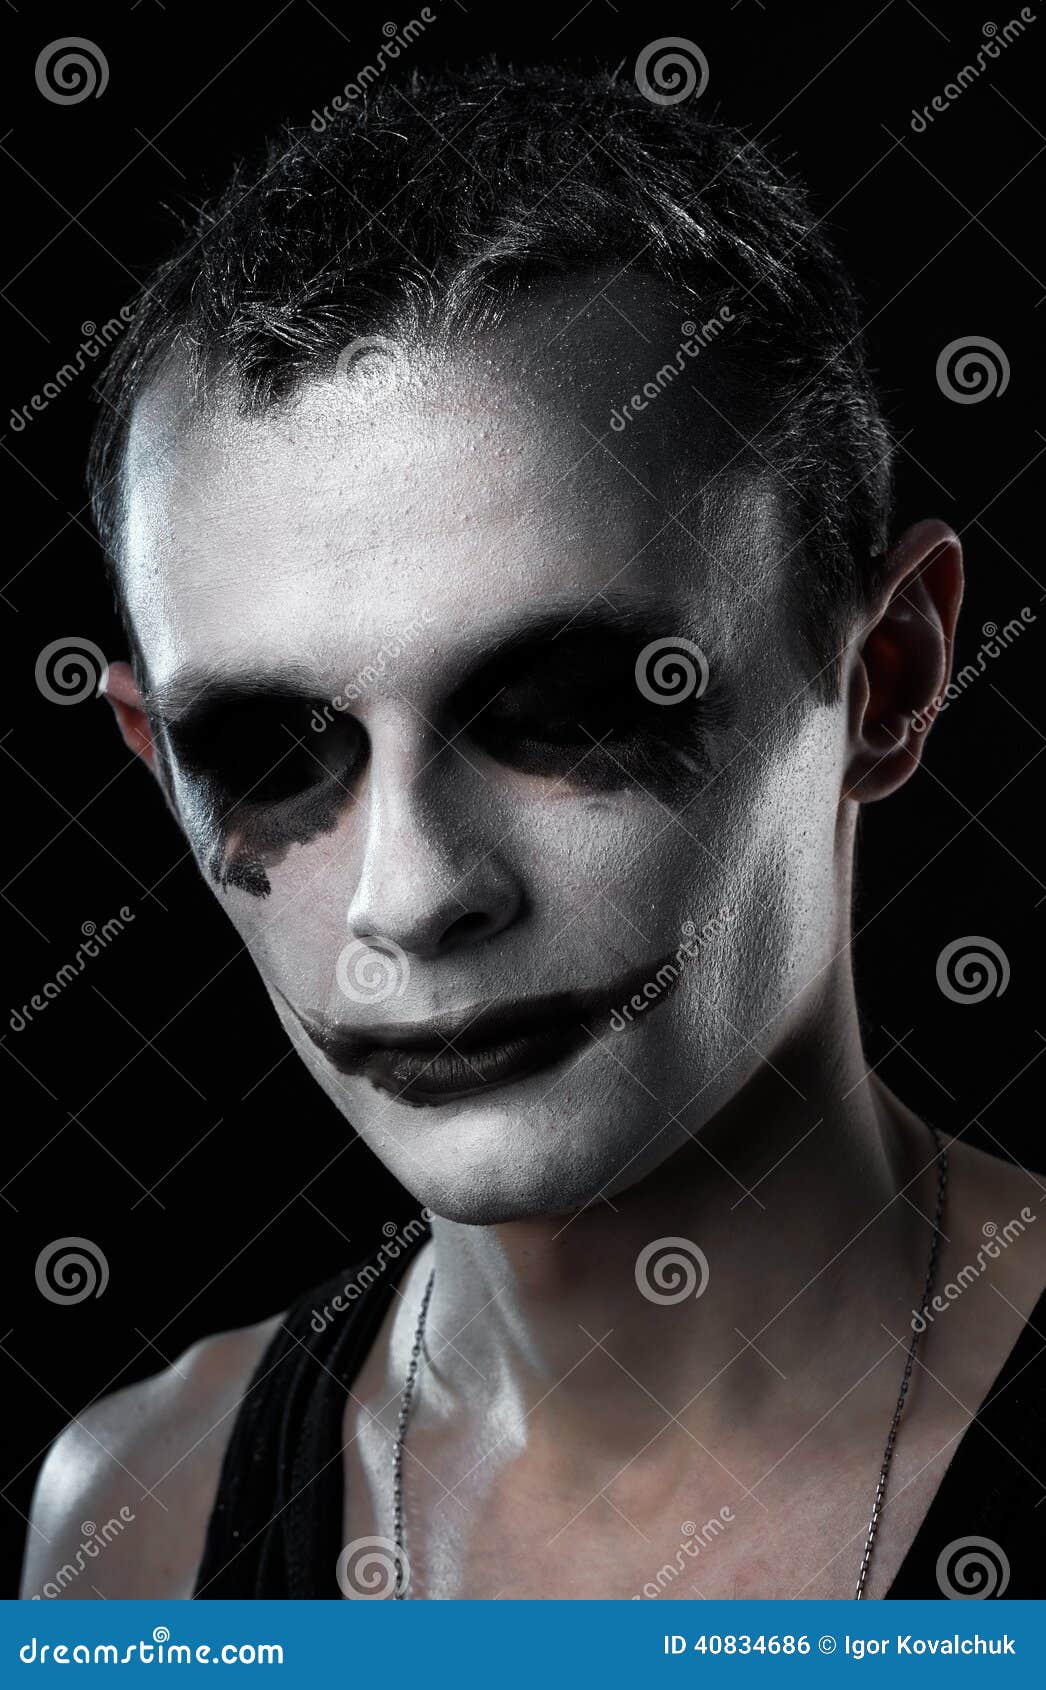 Scary face stock photo. Image of doom, clown, dark, actor - 40834686